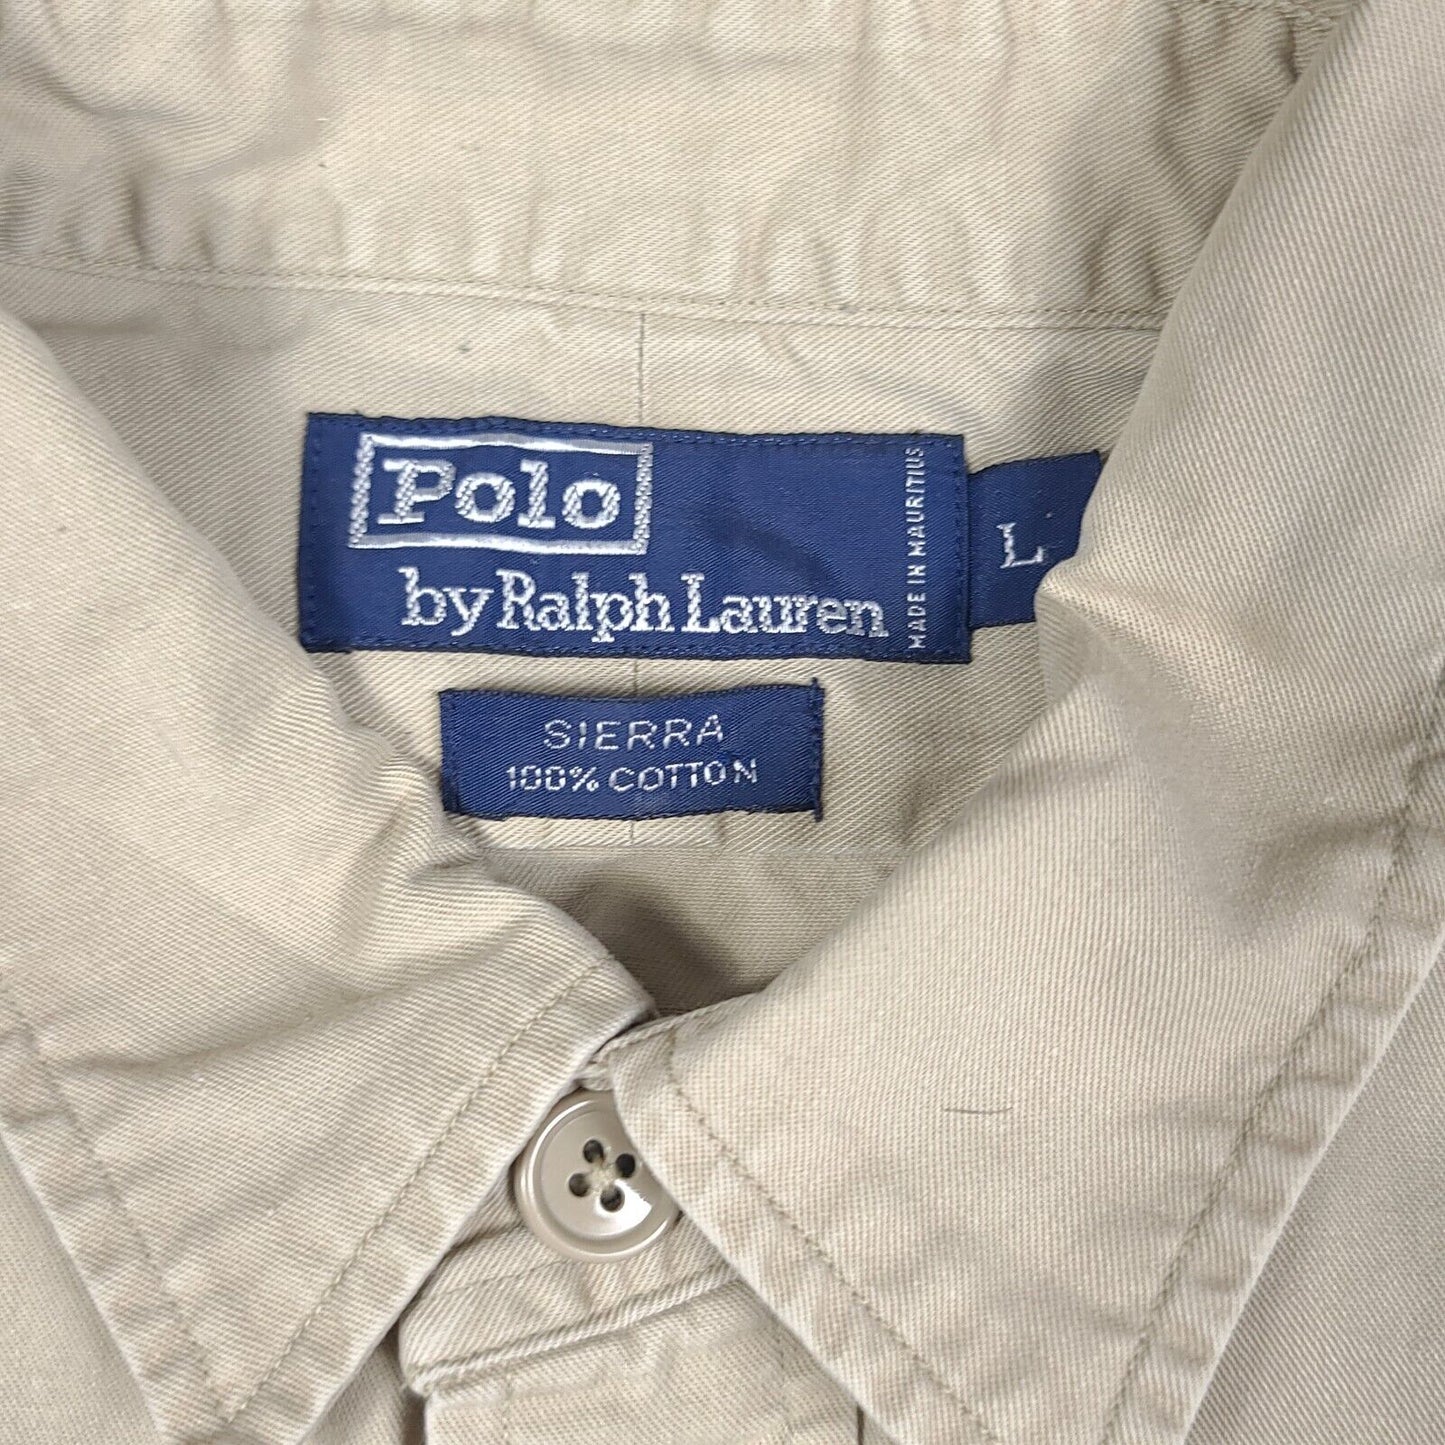 Polo Ralph Lauren Sierra Double Pocket Tan Shirt